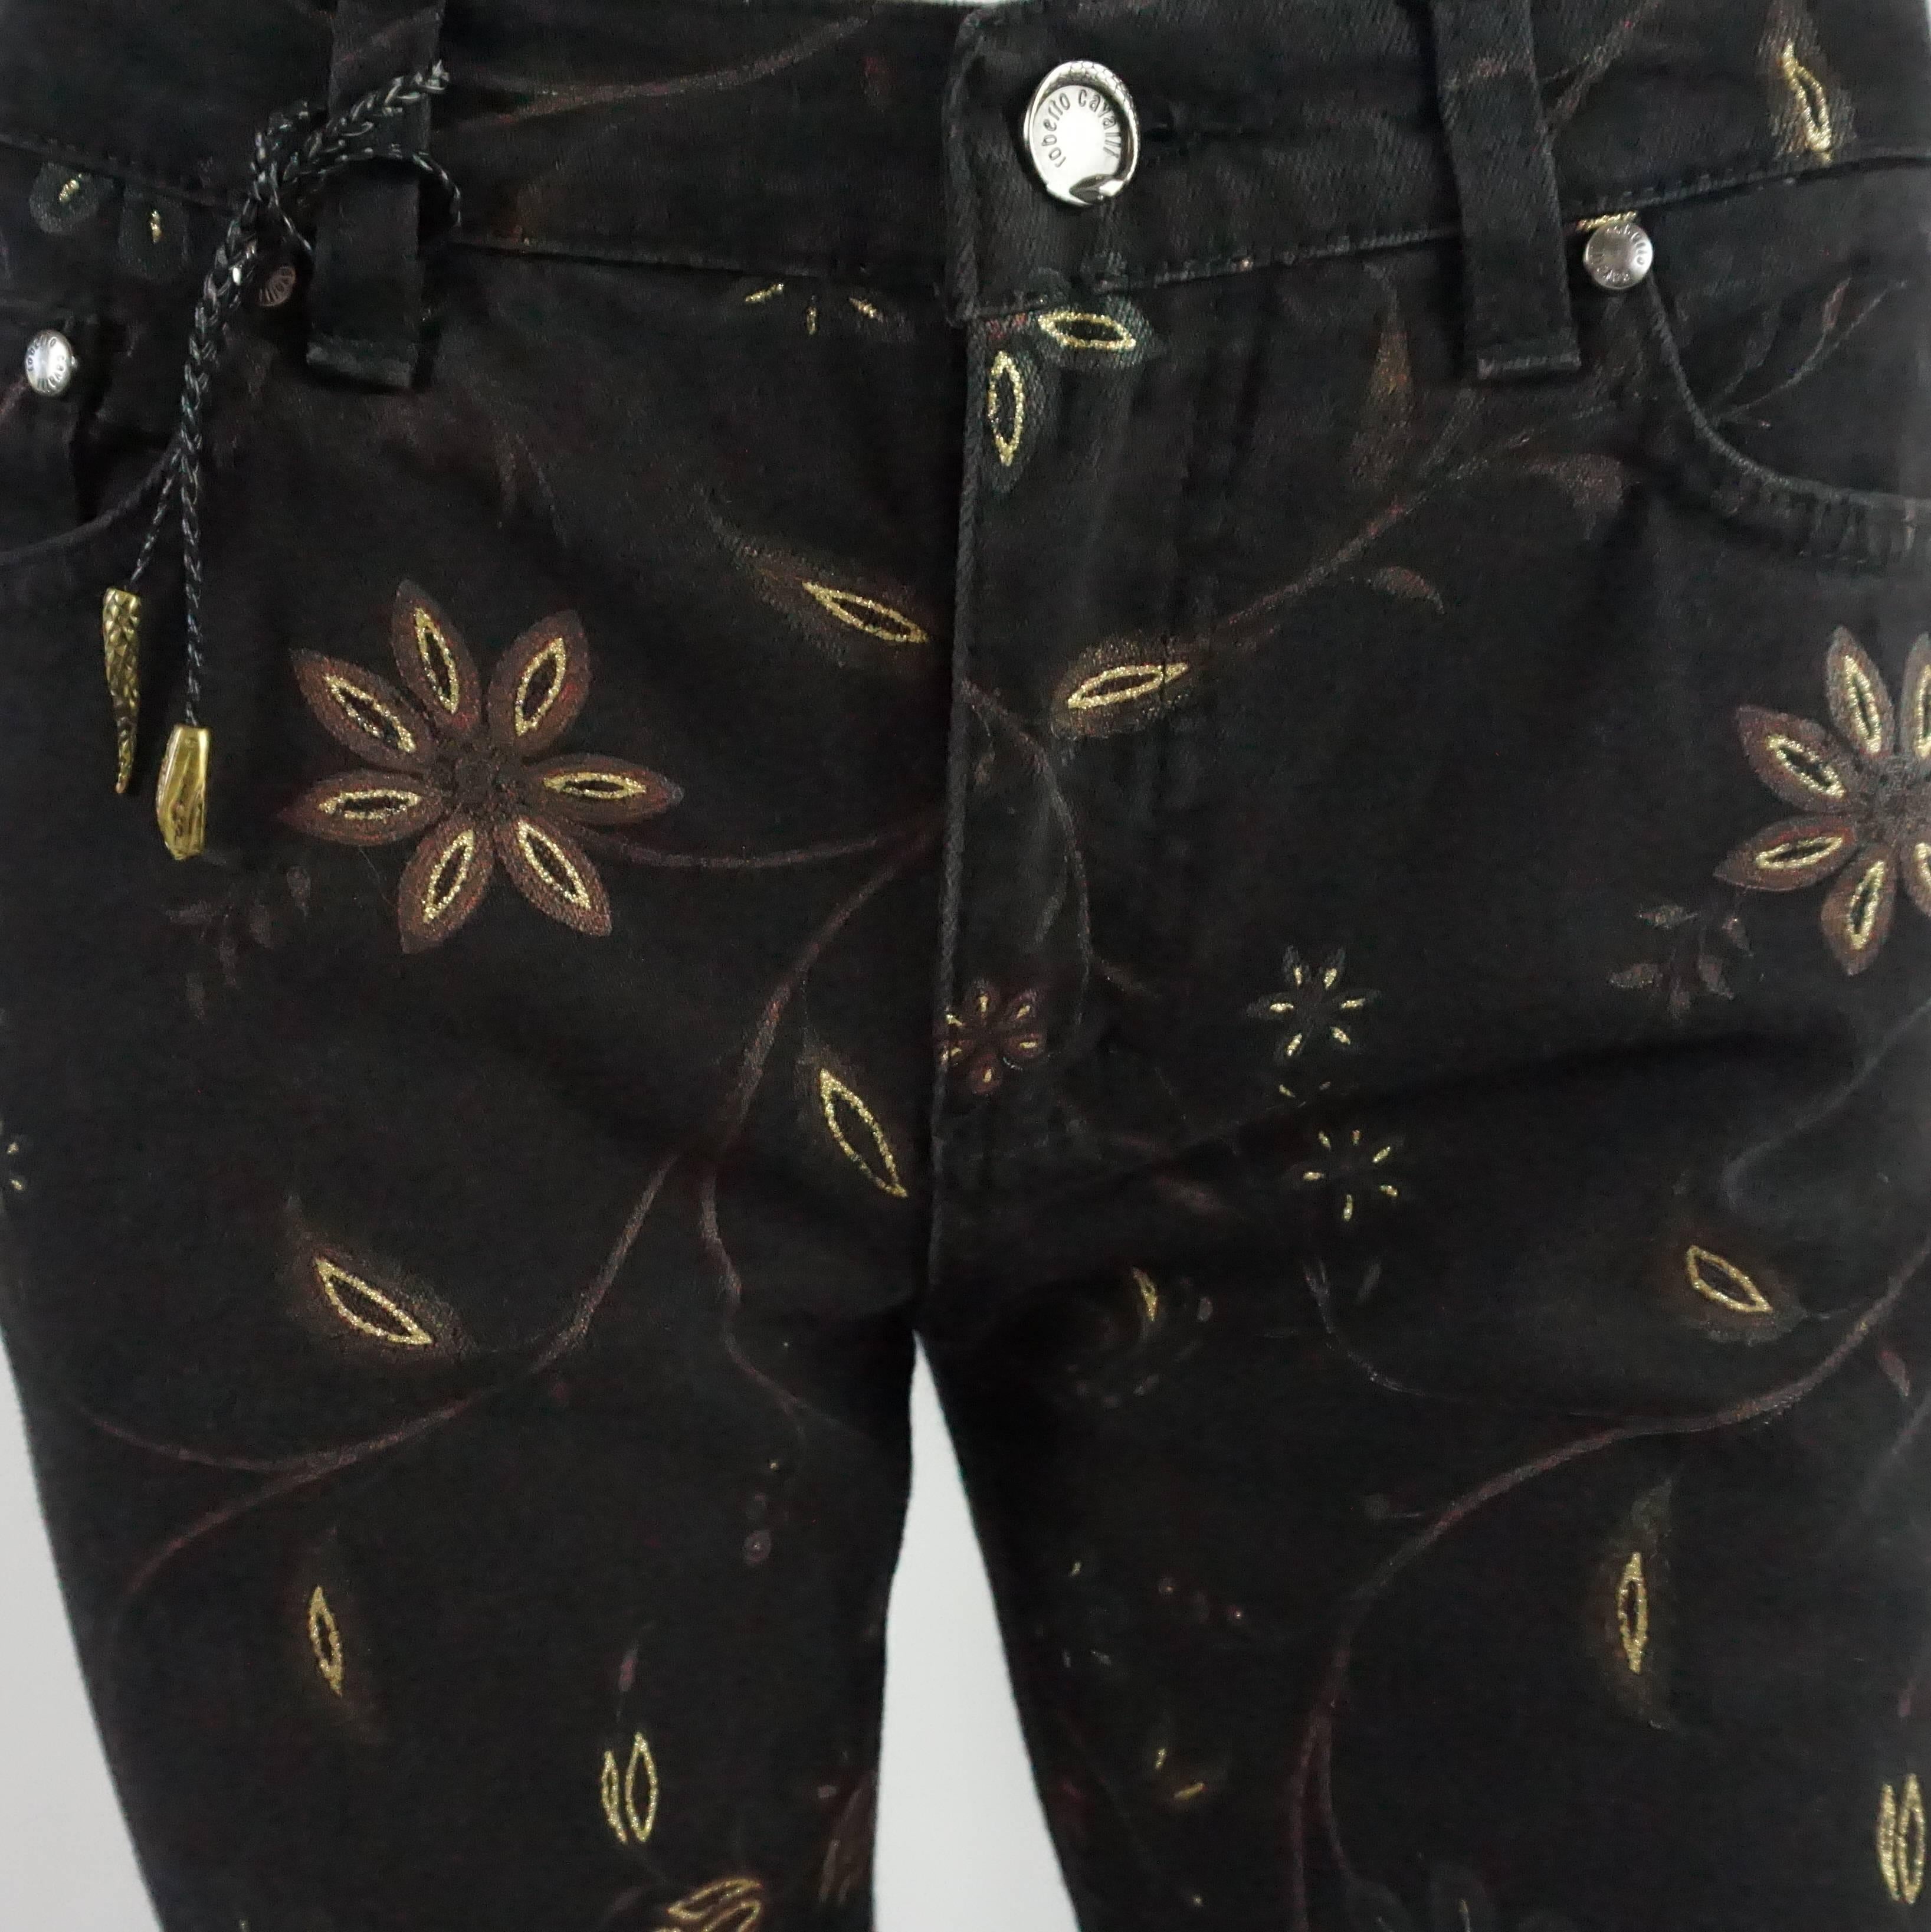 floral black jeans